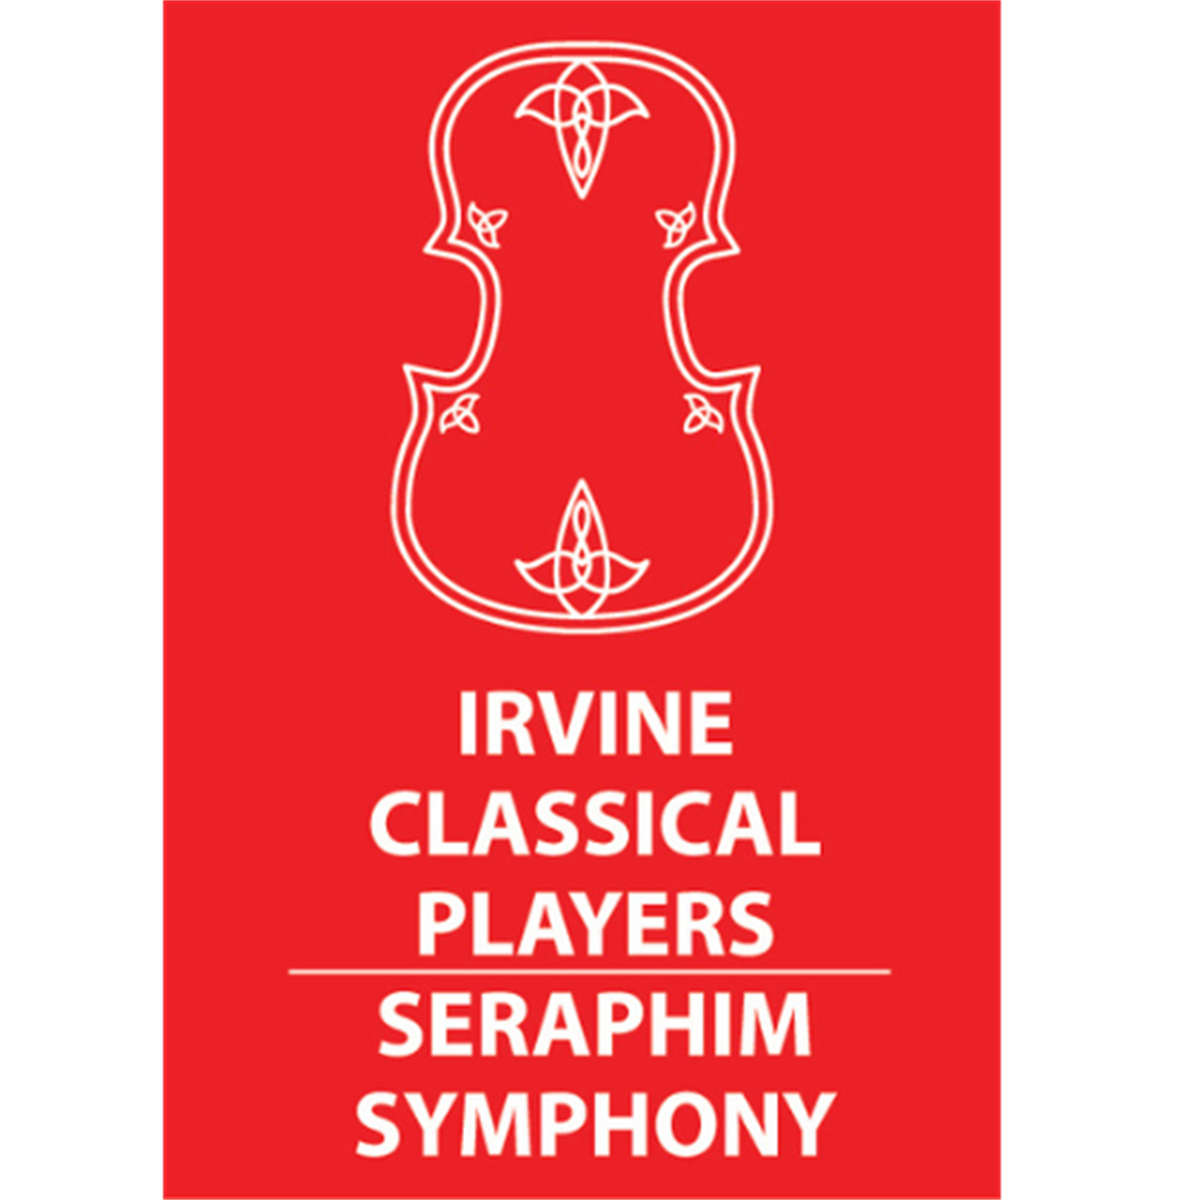 irvine cloassicl palyers logo